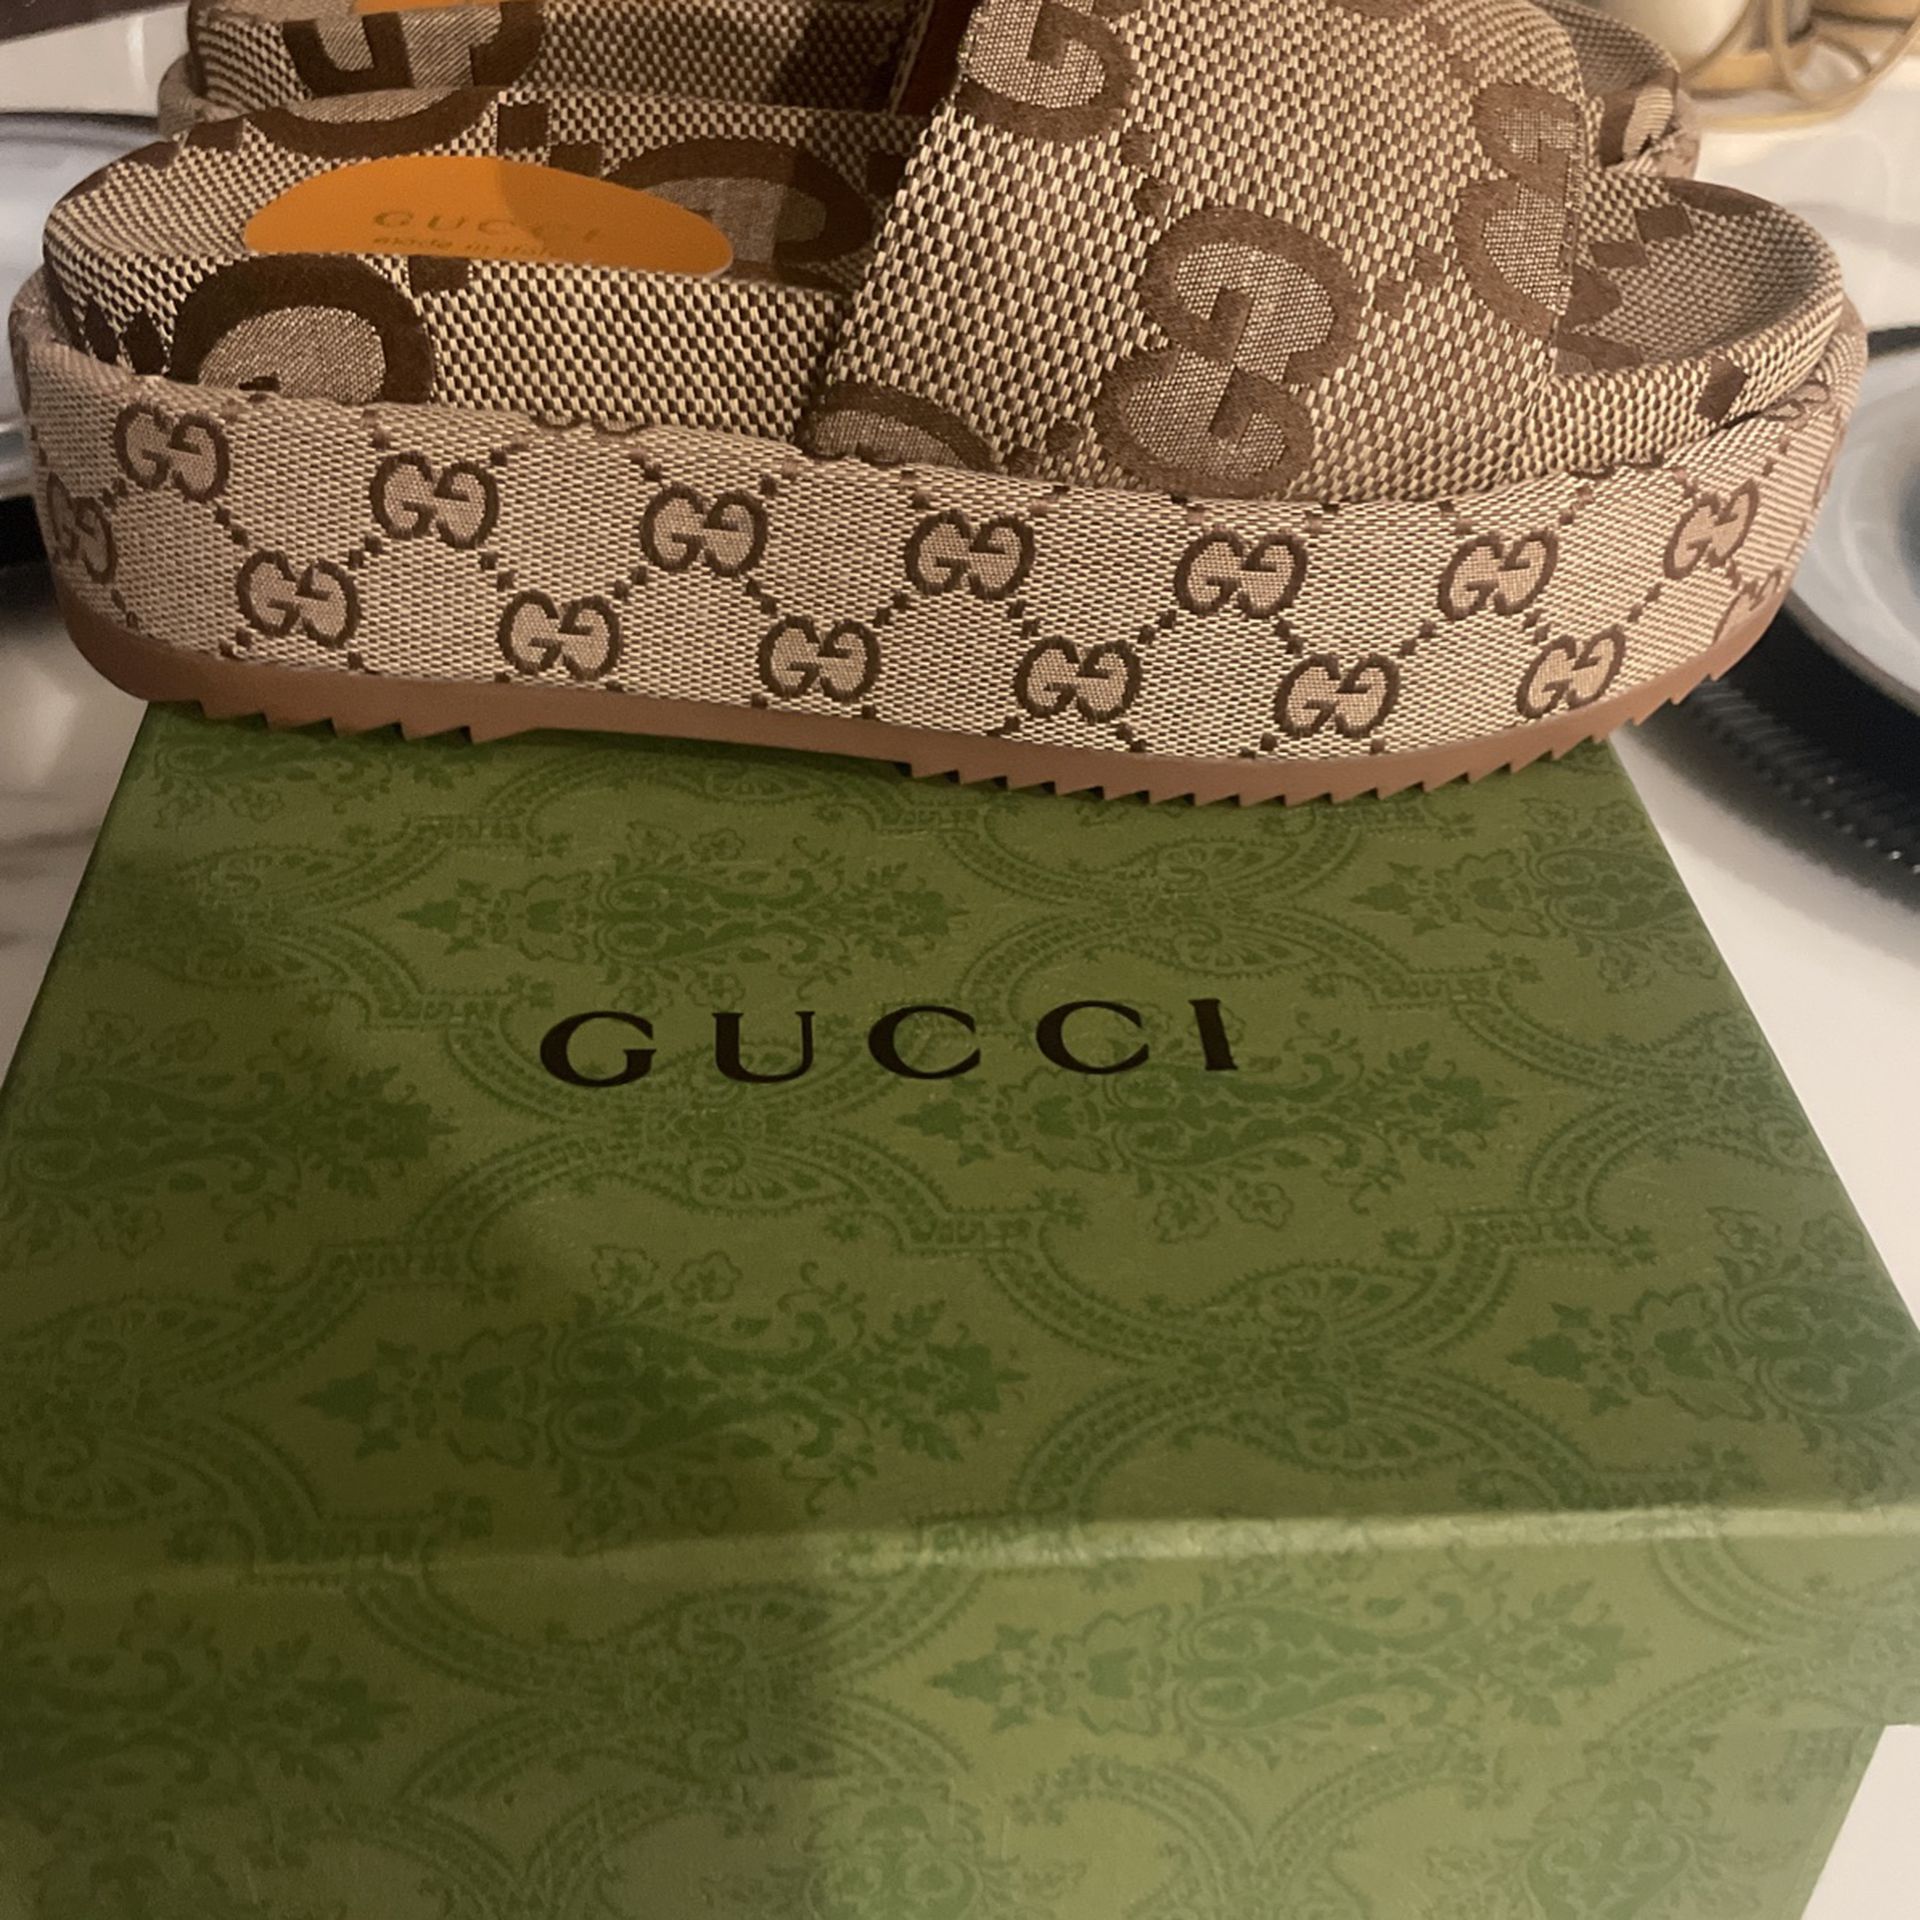 Gucci Women’s Sandals 36 - New! 